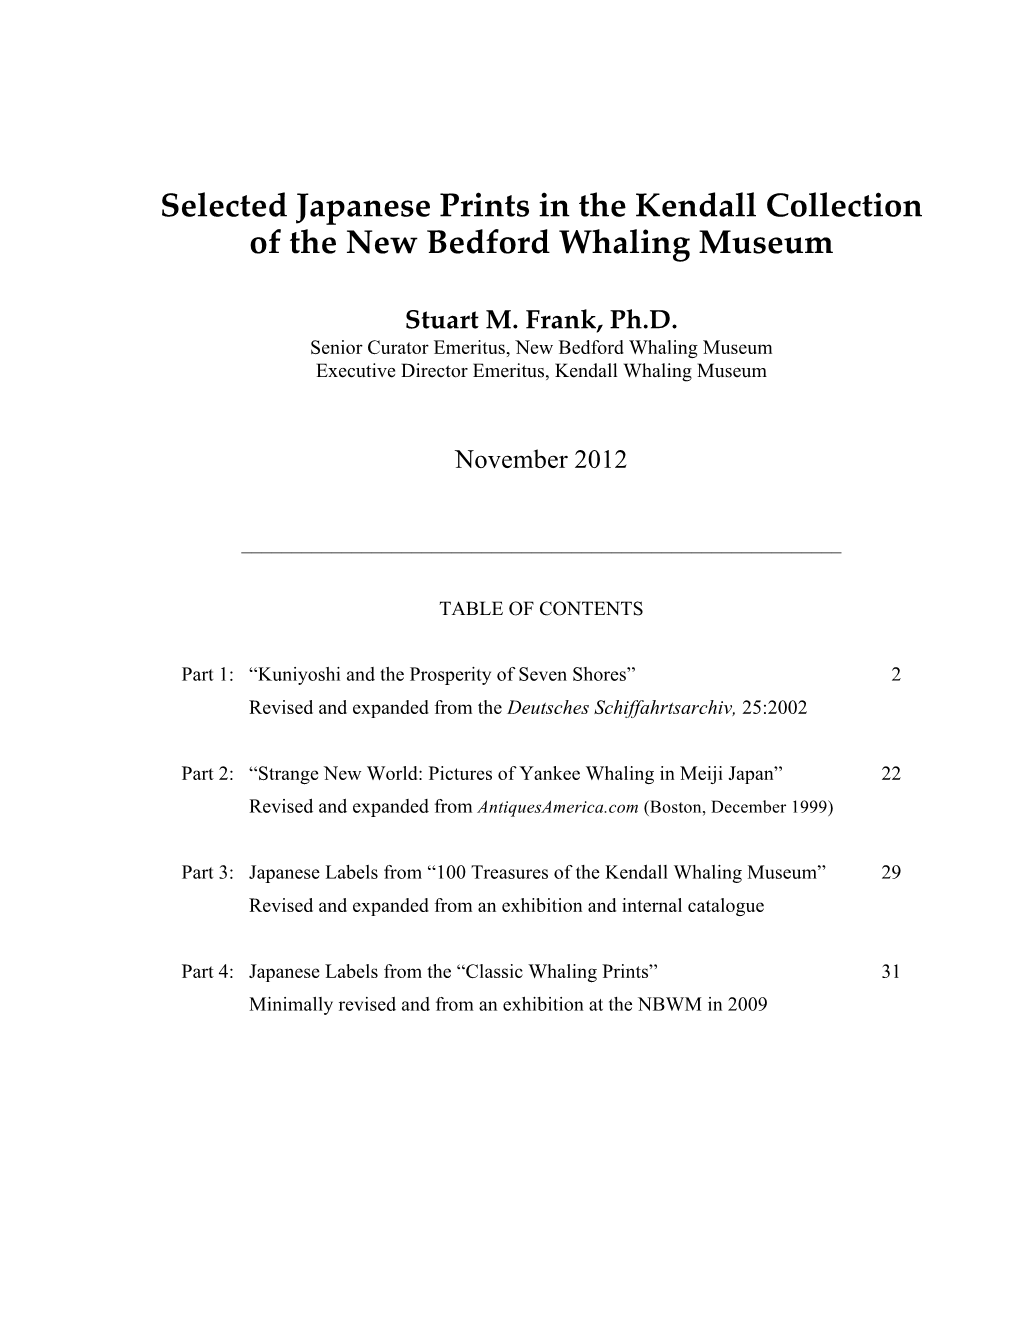 KNB-NB Japanese Prints